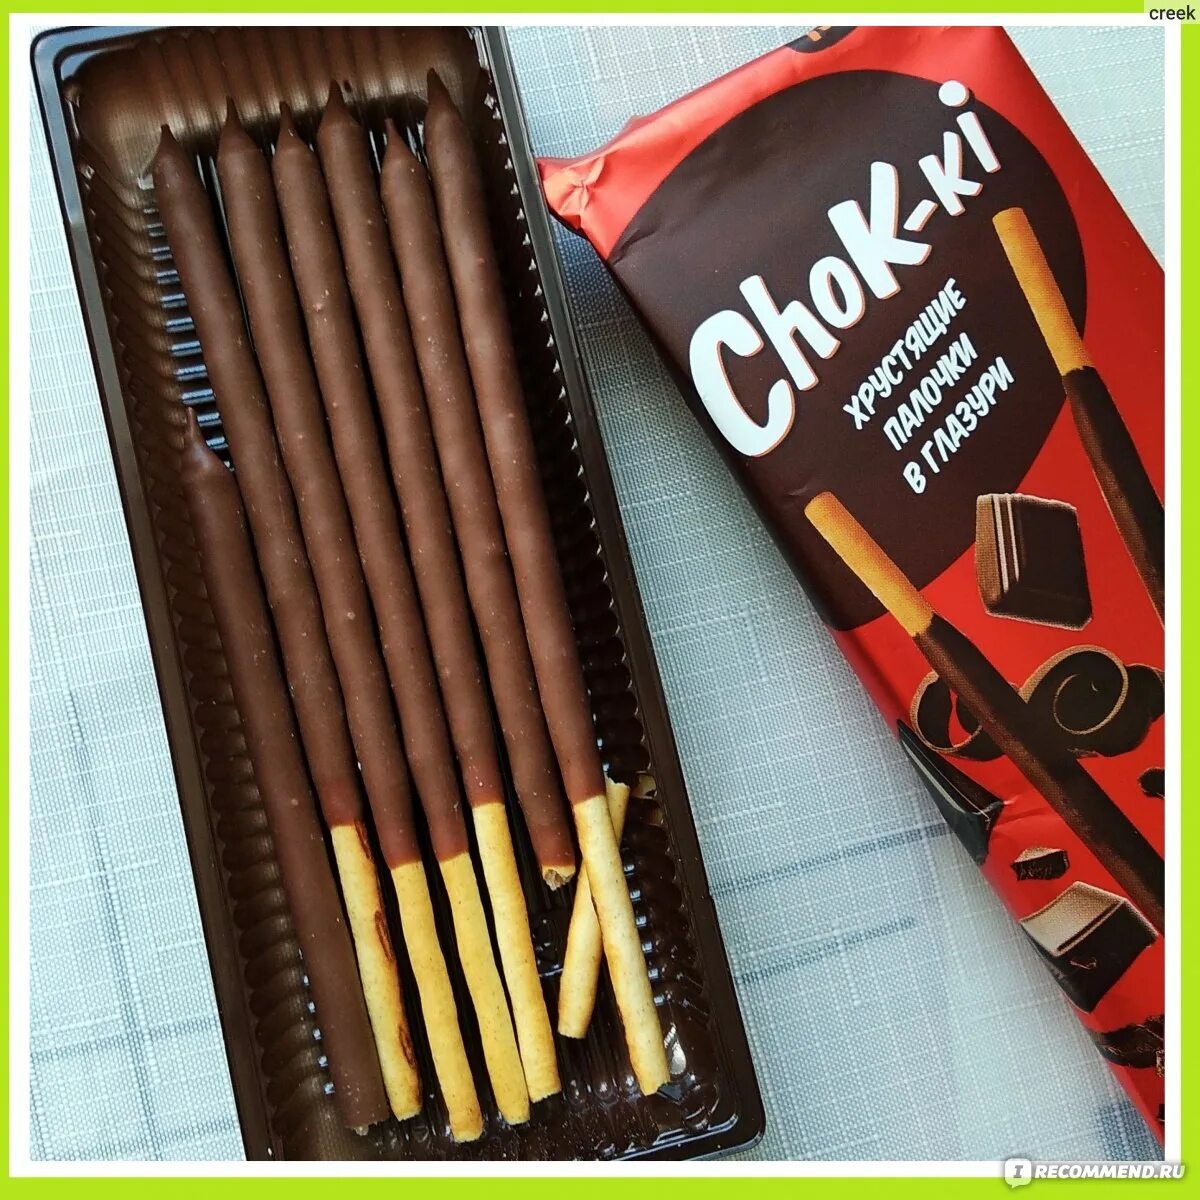 Палочки соломка с шоколадом Chok ki. Корейские шоколадные палочки Пеперо. Палочки в шоколаднойгдазури.